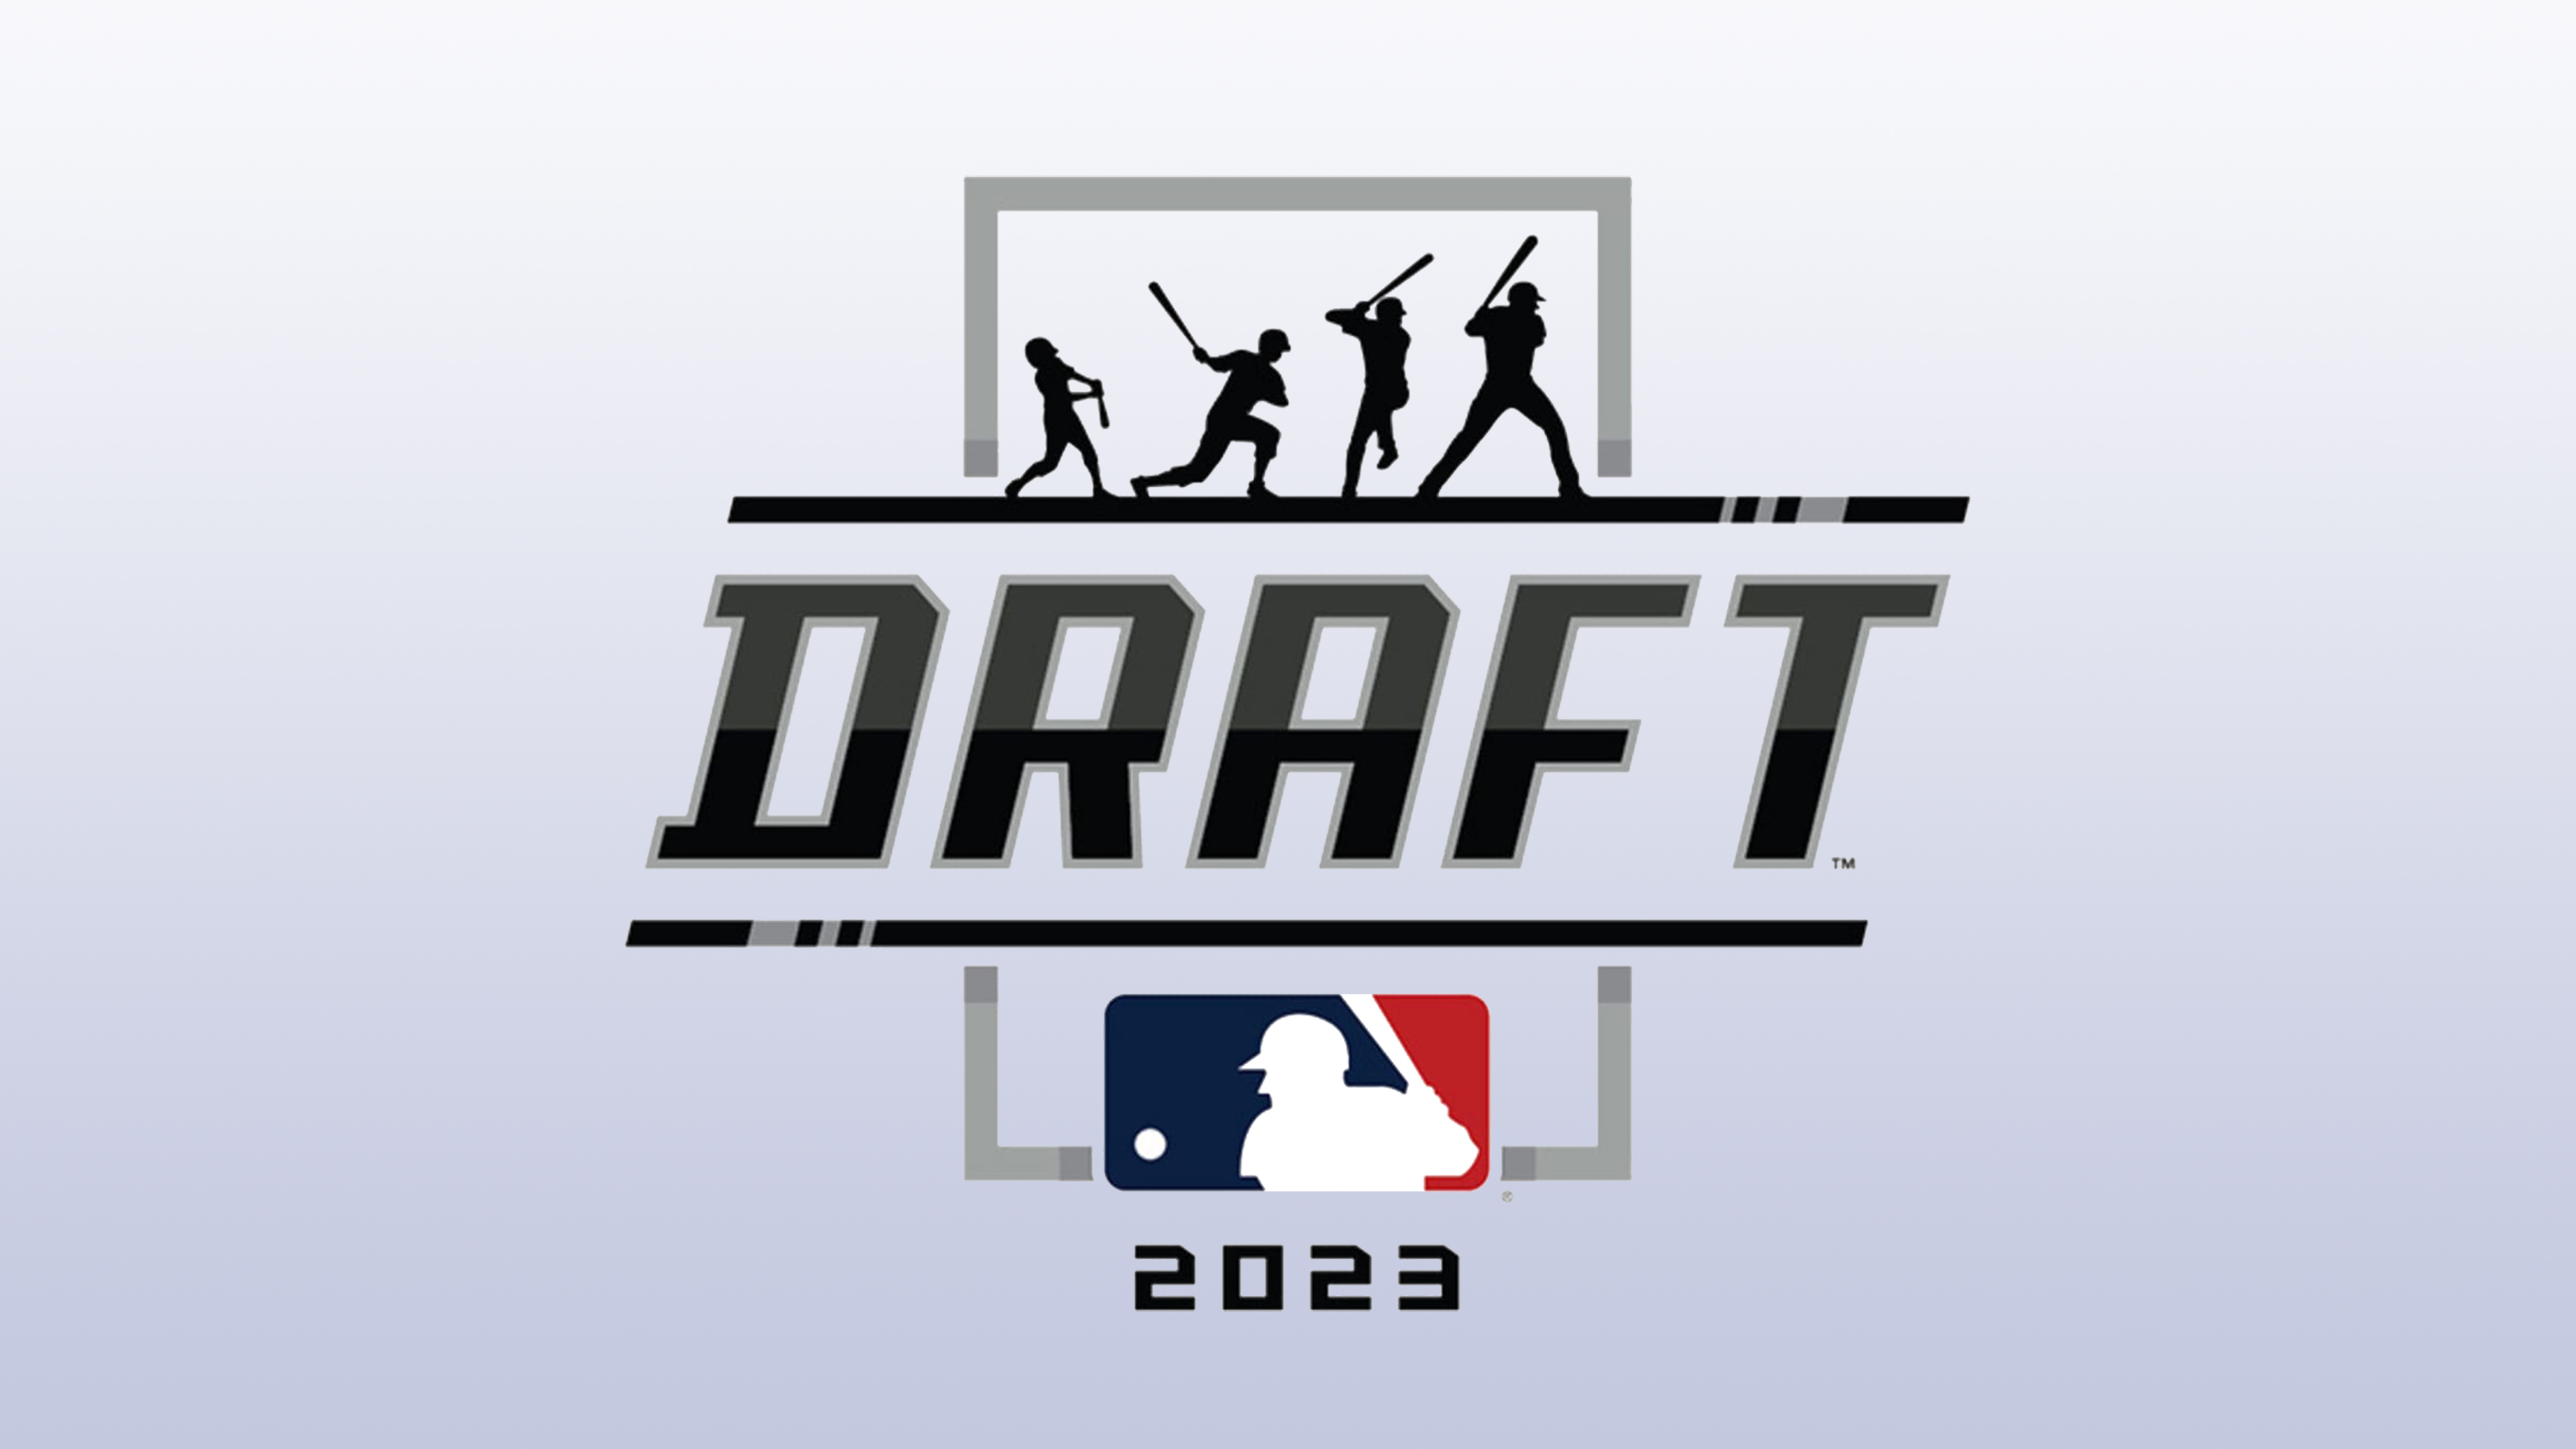 Ken Rosenthal let go by MLB Network